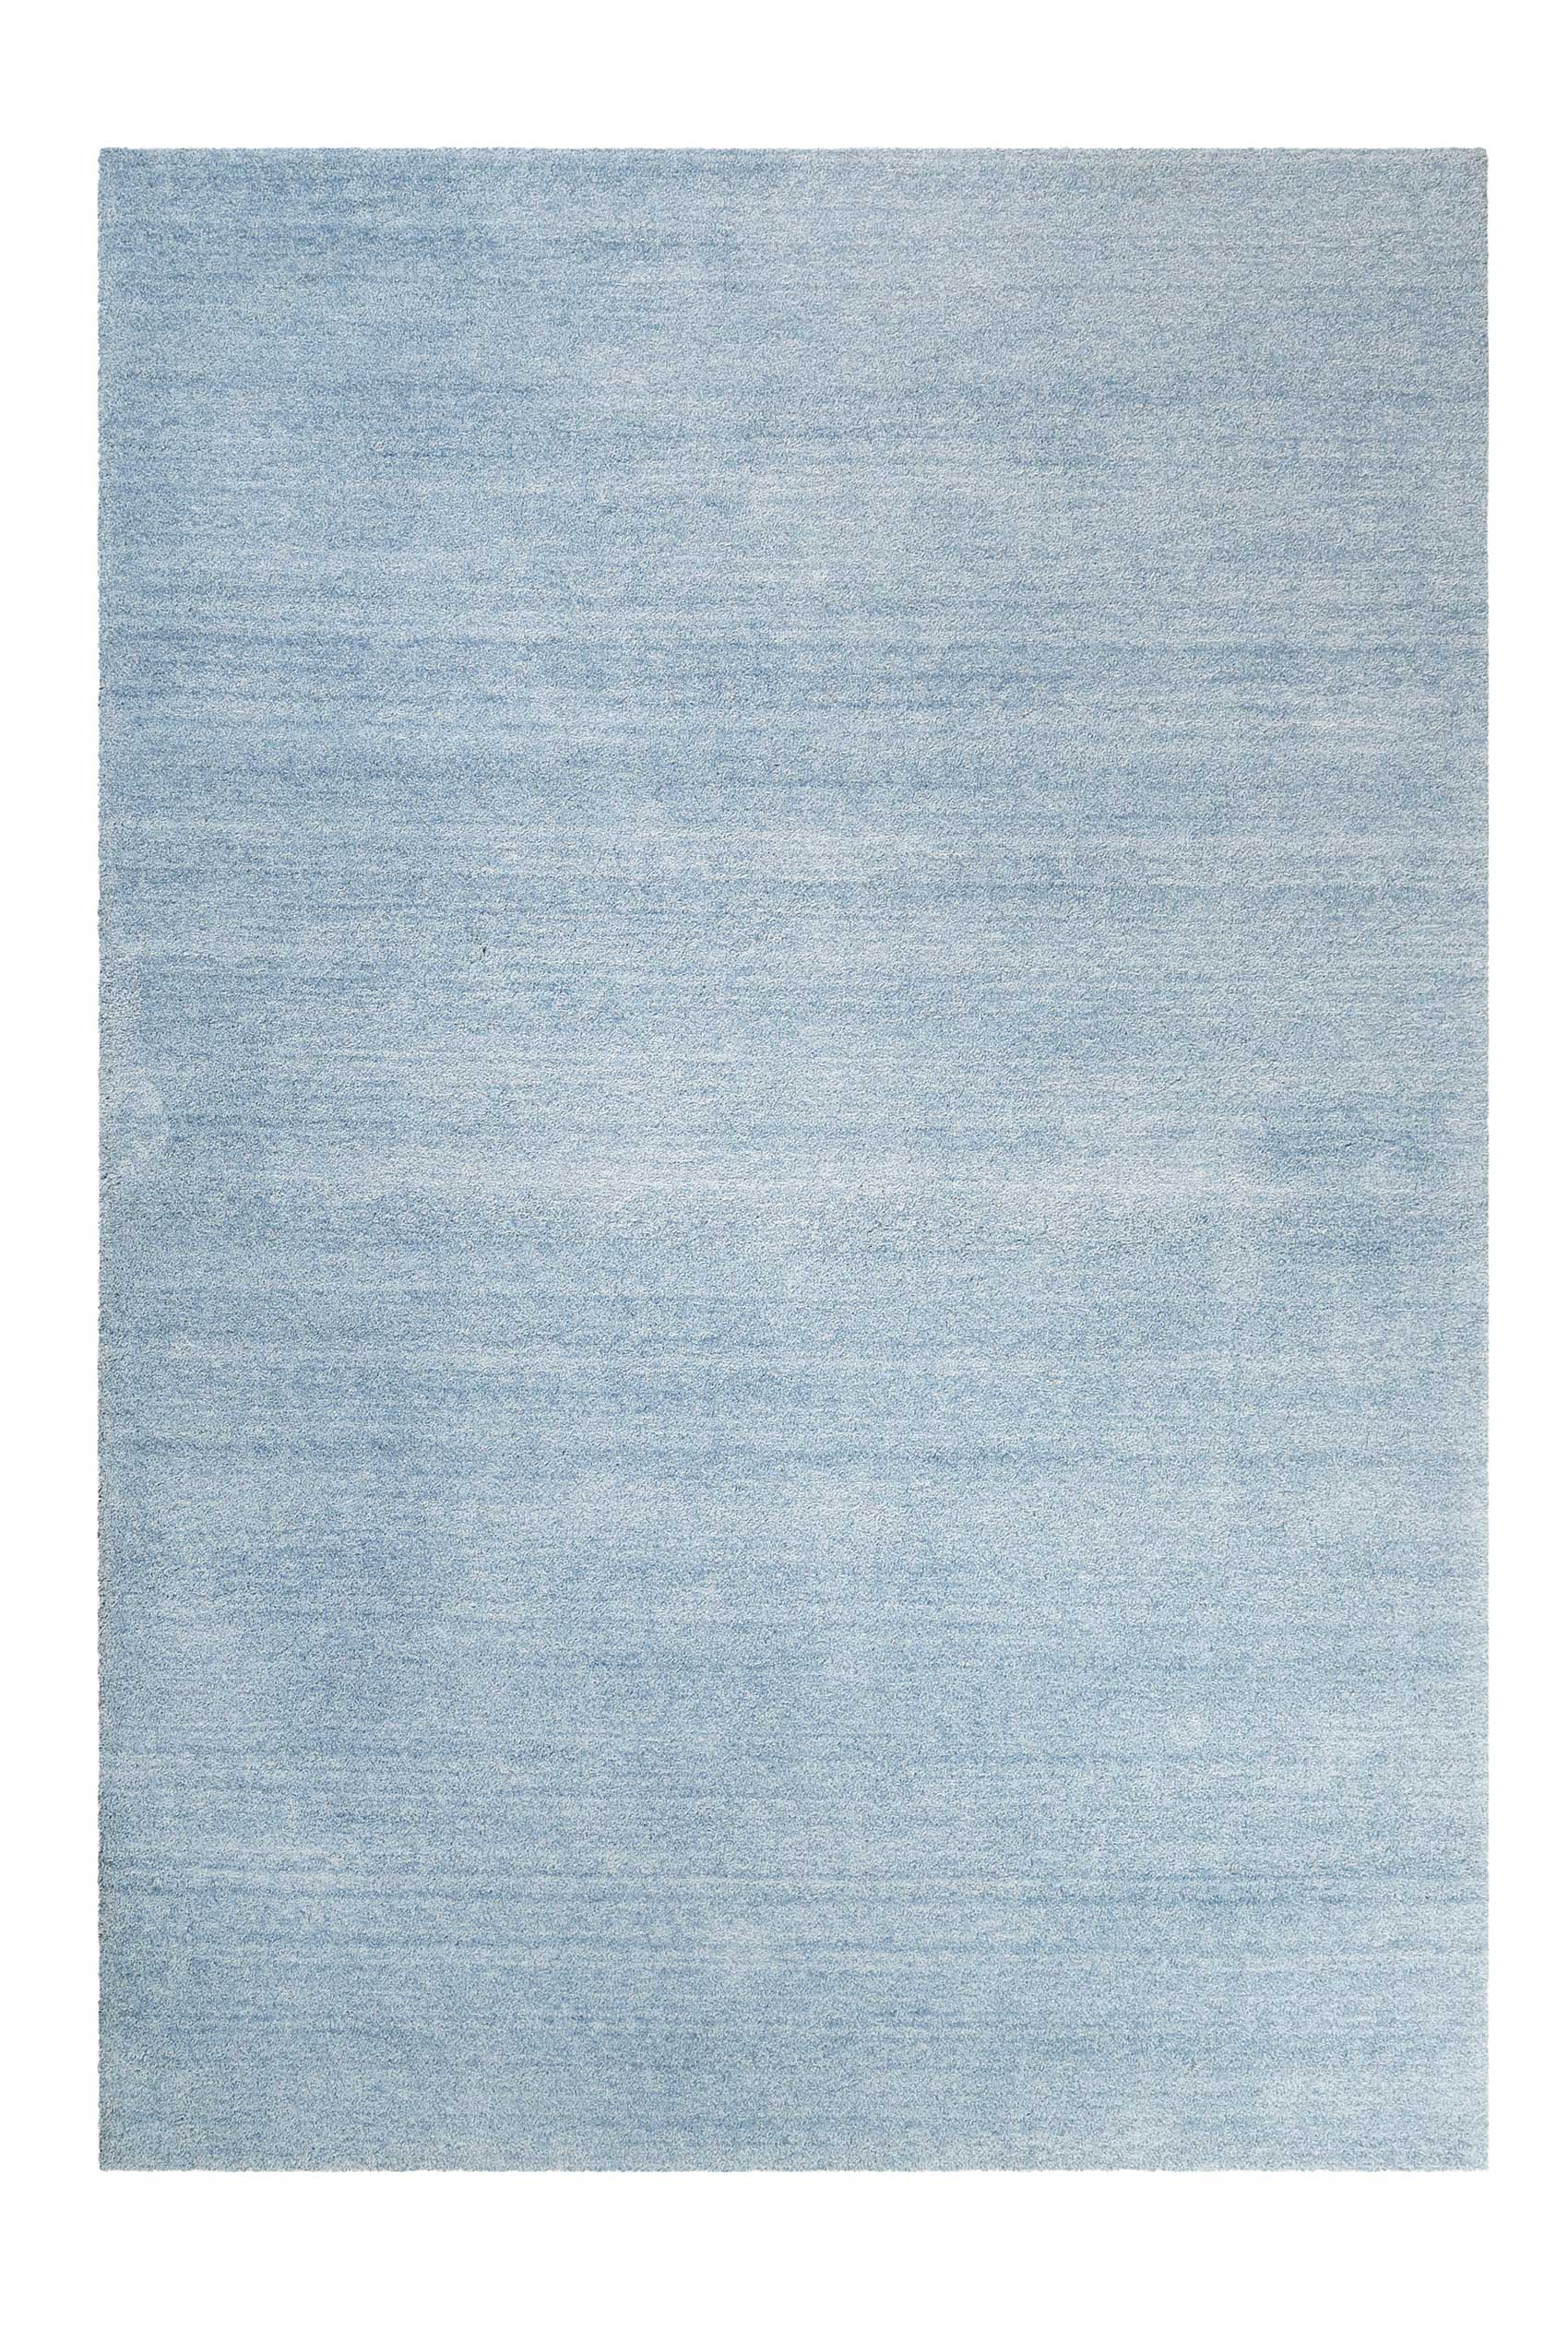 Esprit Teppich Hellblau meliert » Outlet-Teppiche Loft « – Hochflor